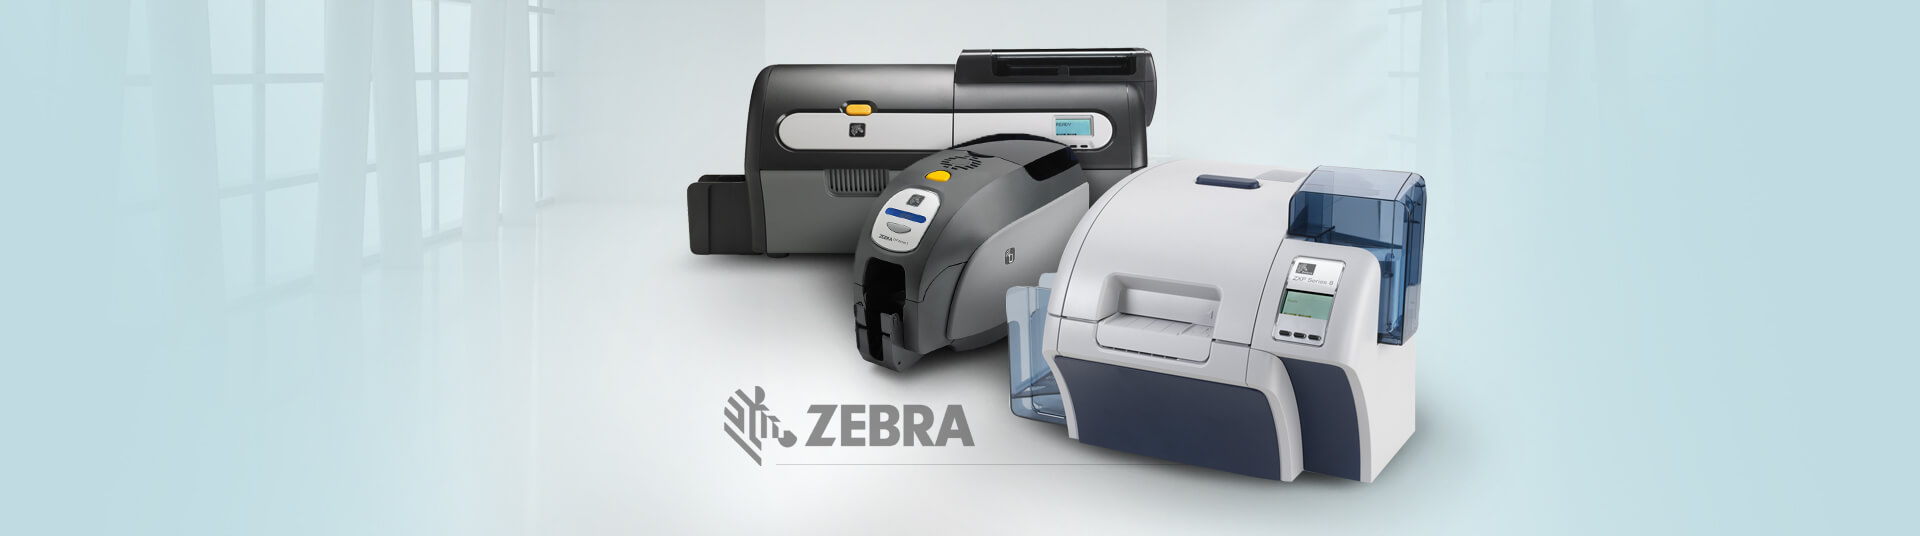 Zebra Badge Printer for College and University IDs